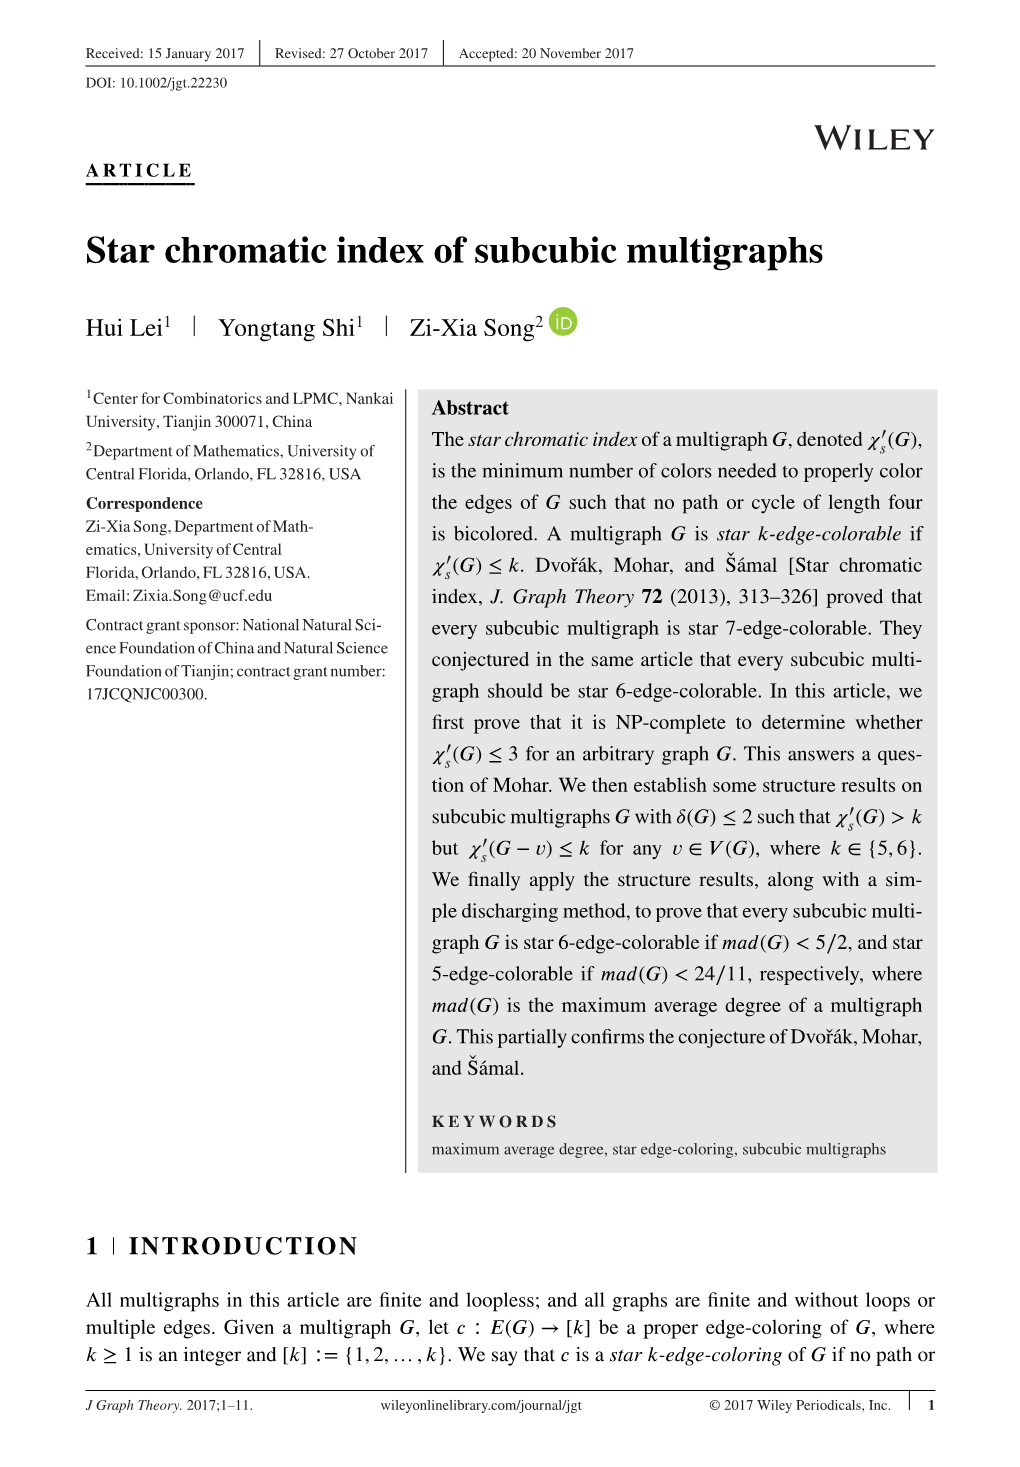 Star Chromatic Index of Subcubic Multigraphs